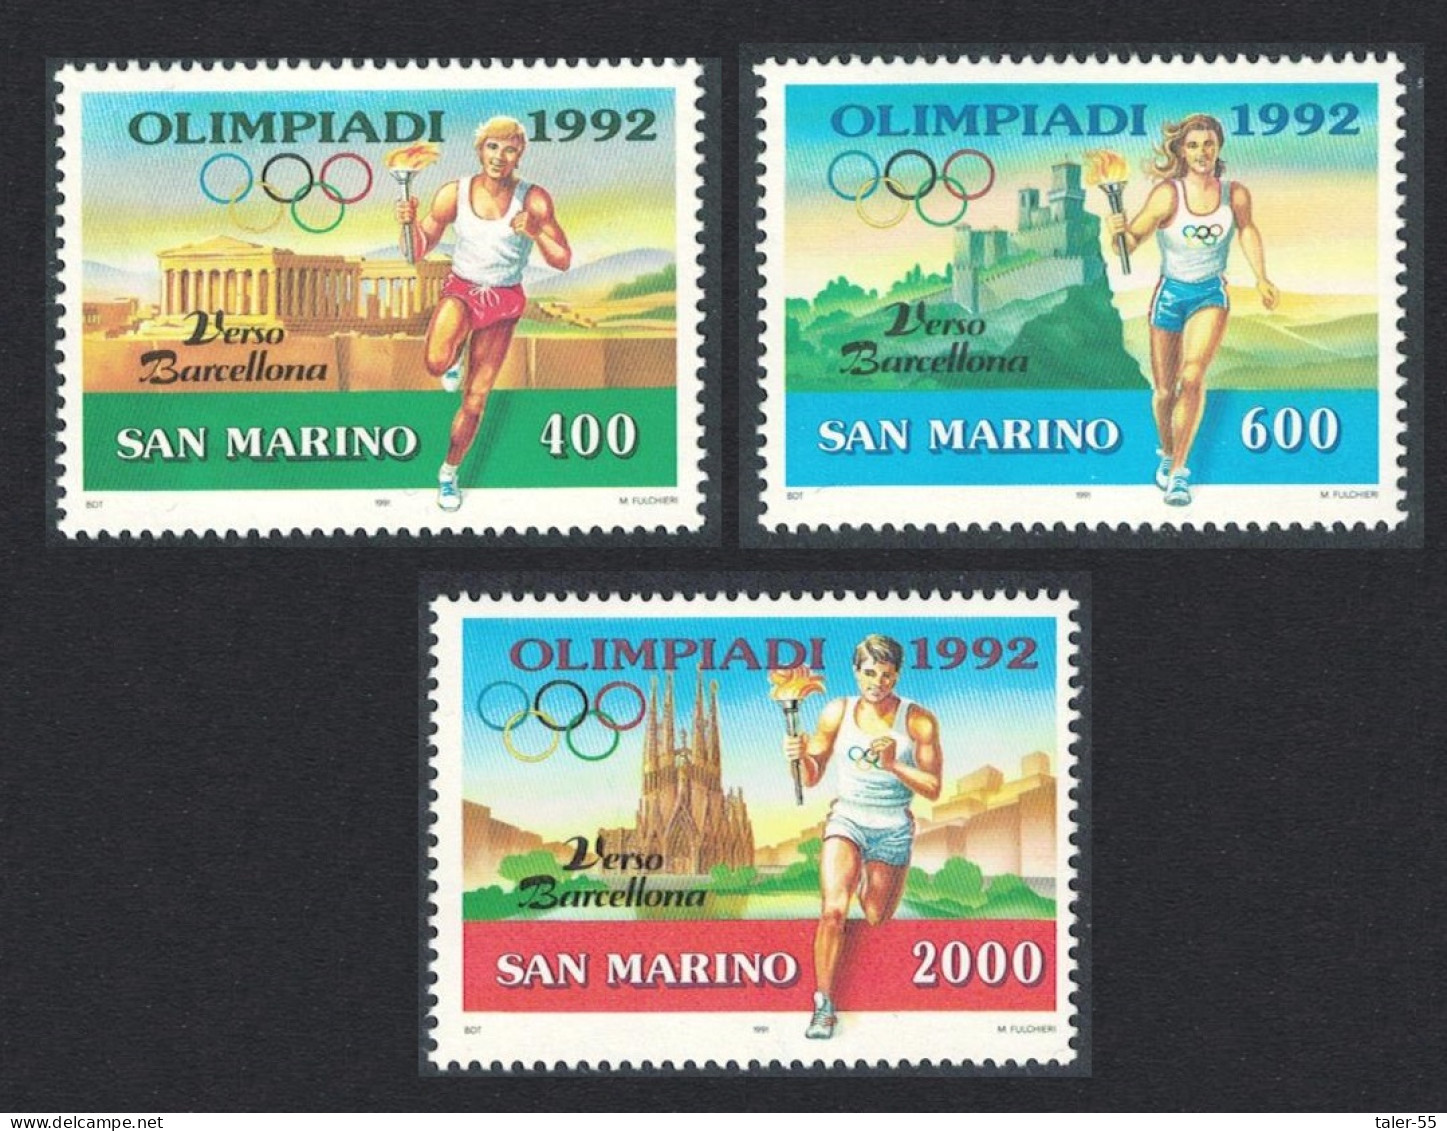 San Marino Olympic Games Barcelona 1992 3v 1991 MNH SG#1398-1400 - Unused Stamps